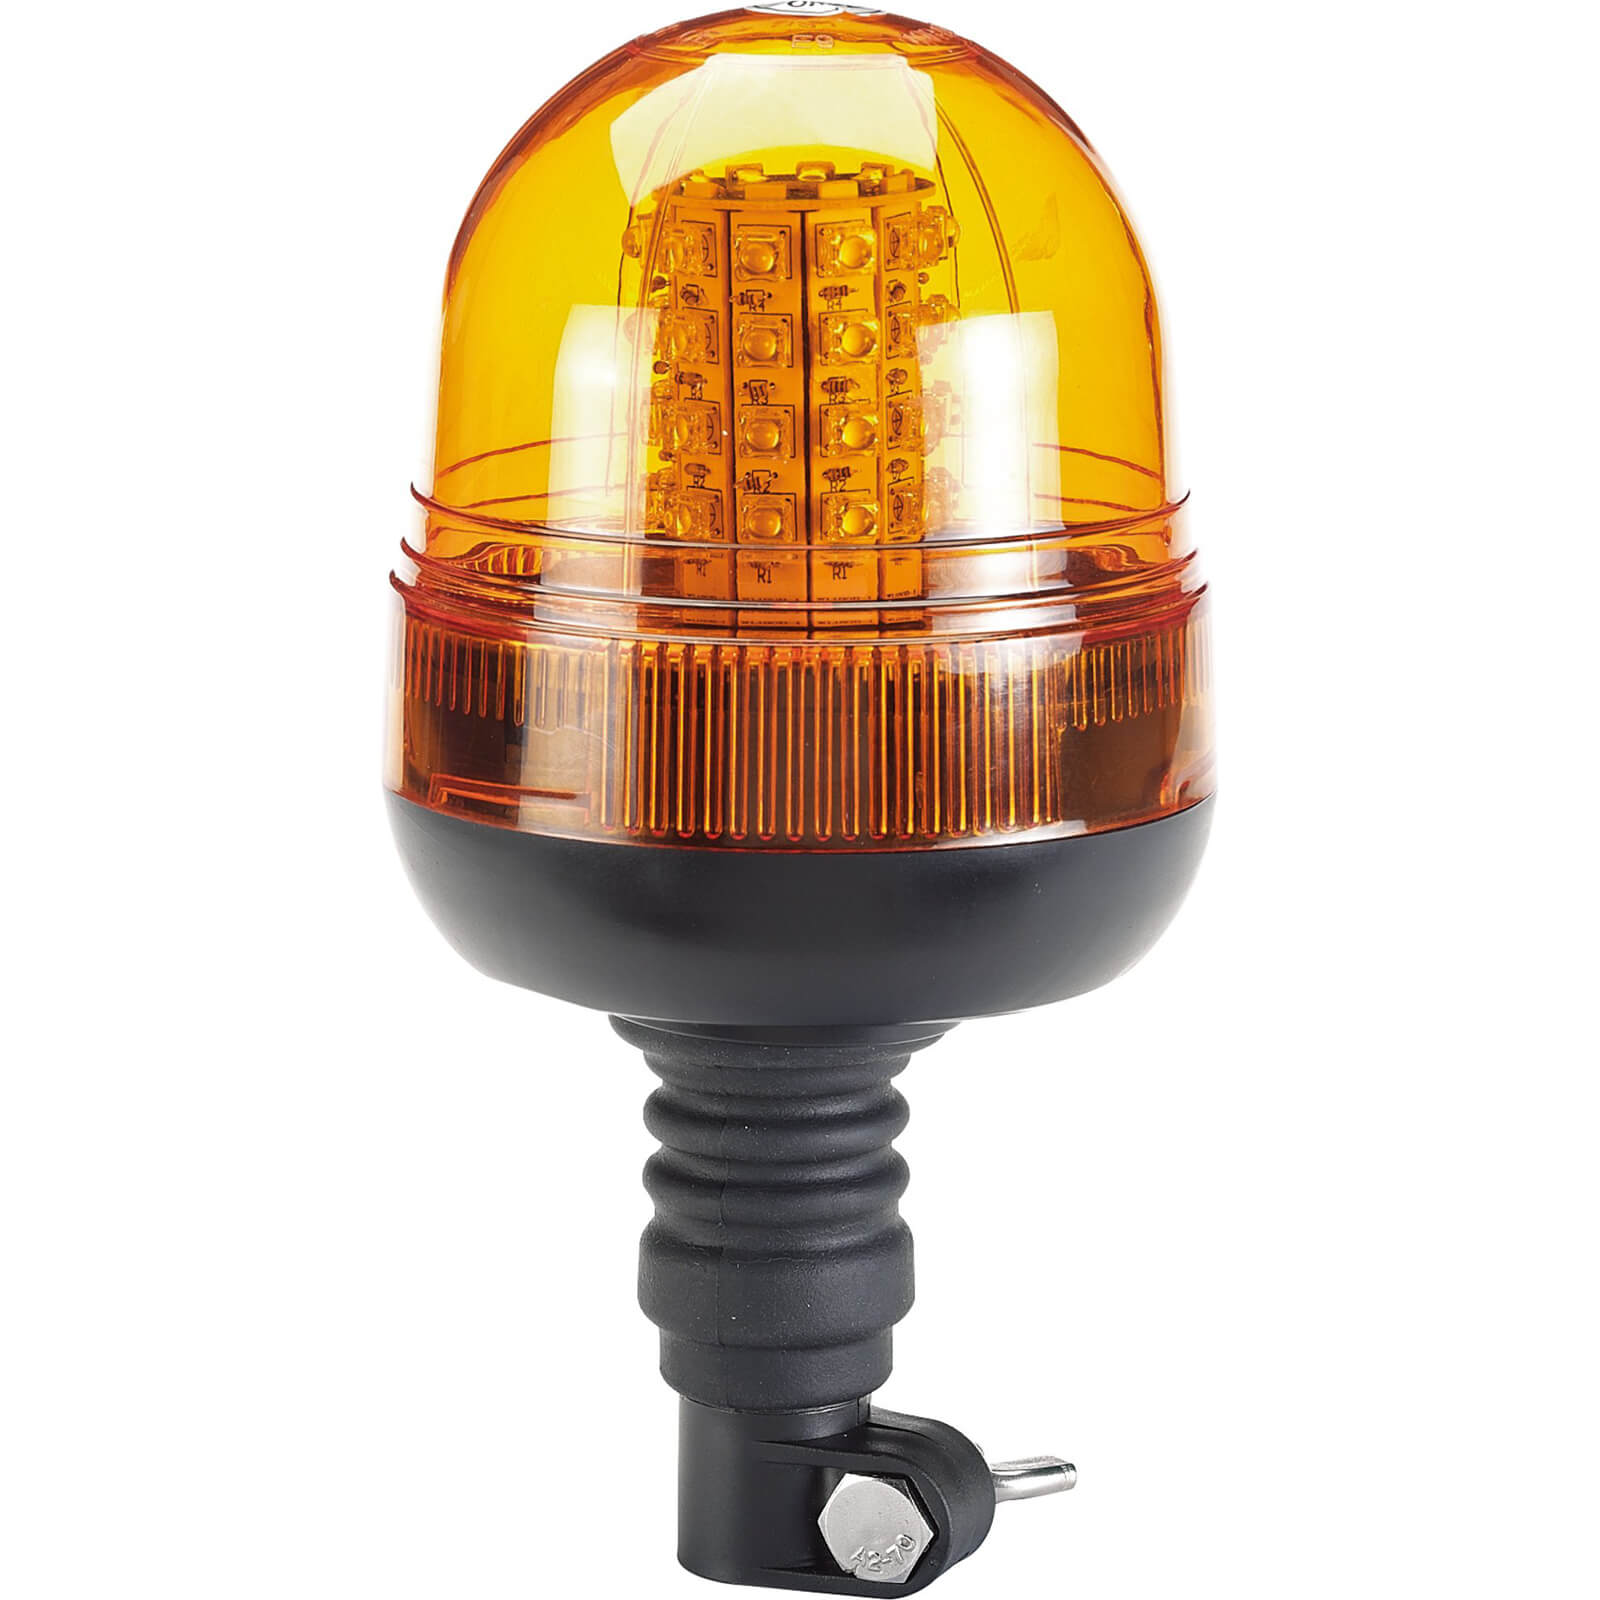 Image of Draper RWB6 Flexible Spigot Base LED Rotating Warning Light / Beacon